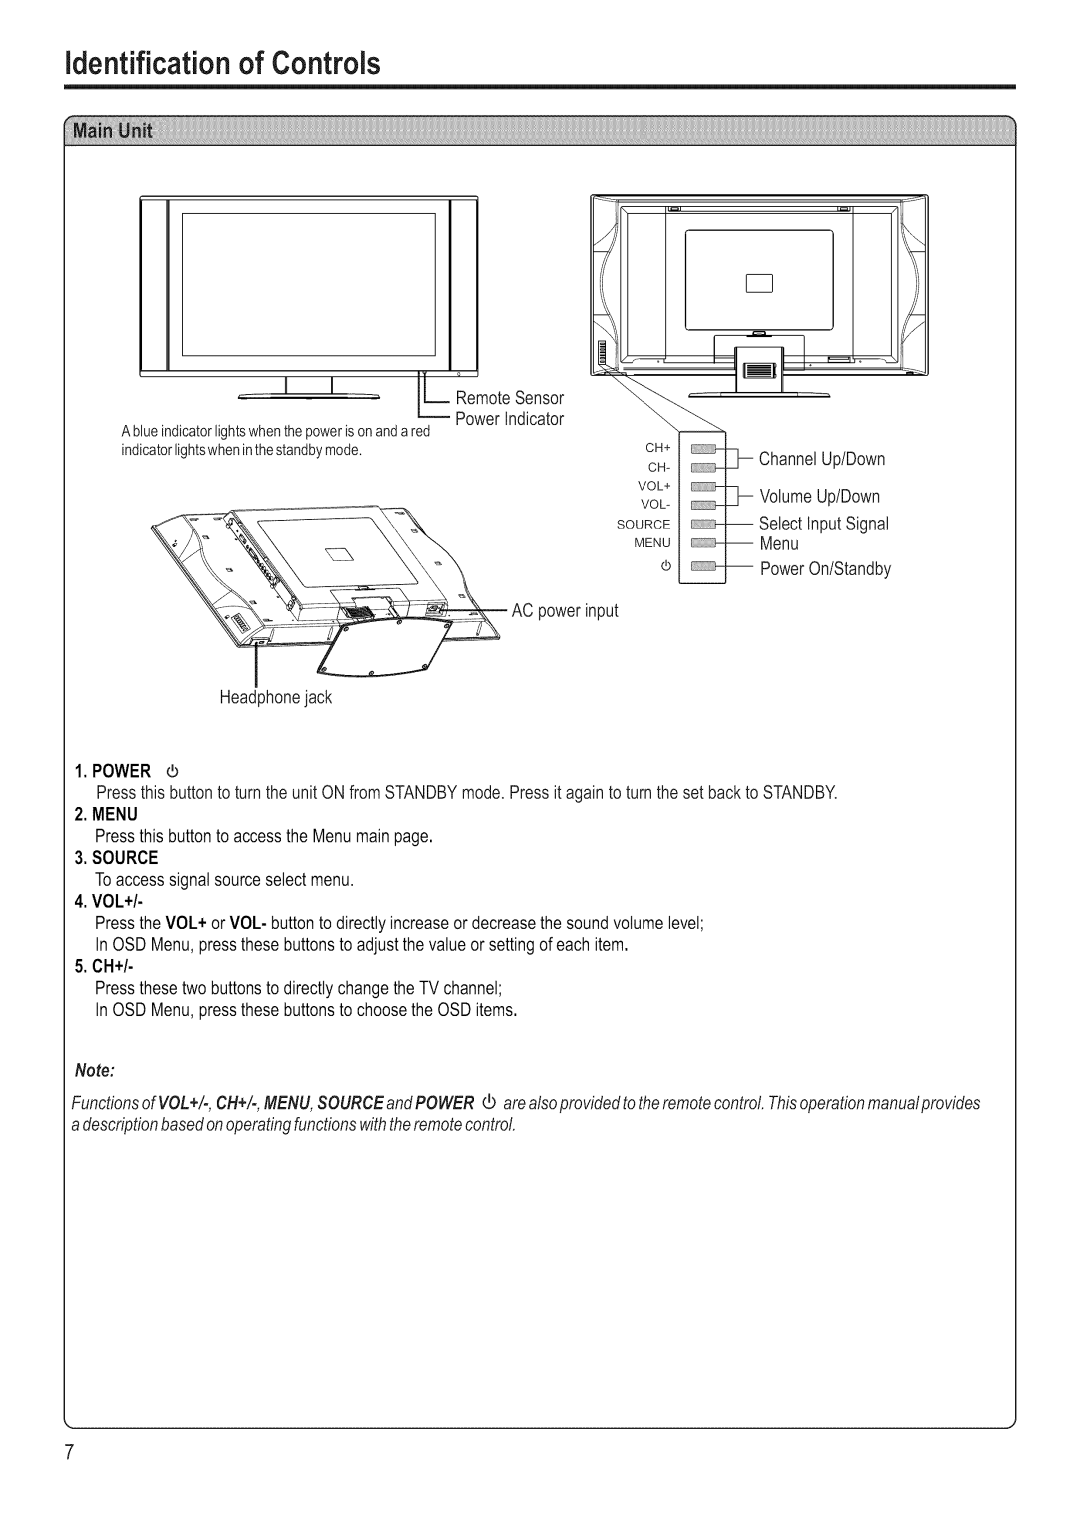 Polaroid FLM-3201 manual identificationof Controls, POWER d, Menu, Source, Vol+ 